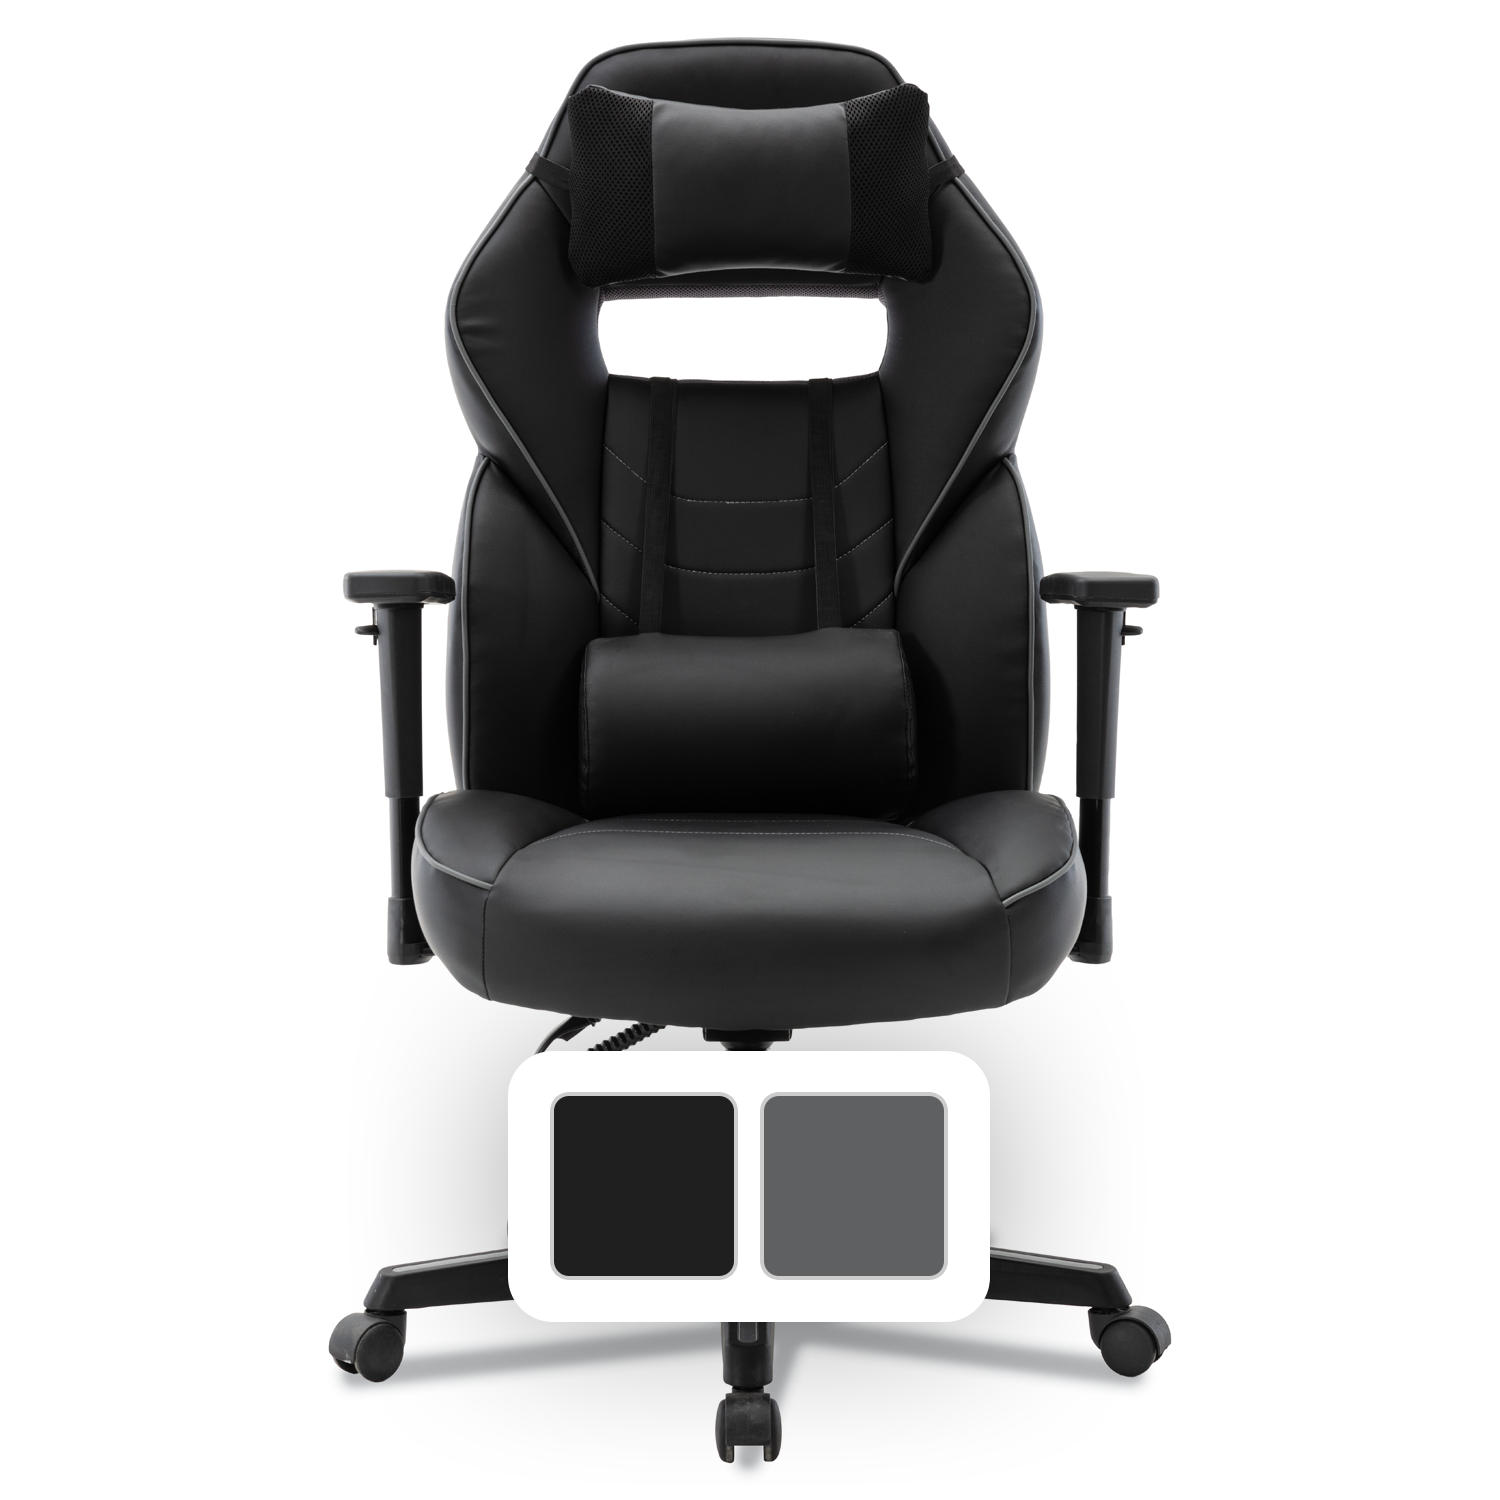 UPC 042167000042 product image for Alera Racing Style Ergonomic Gaming Chair, Black/Gray | upcitemdb.com